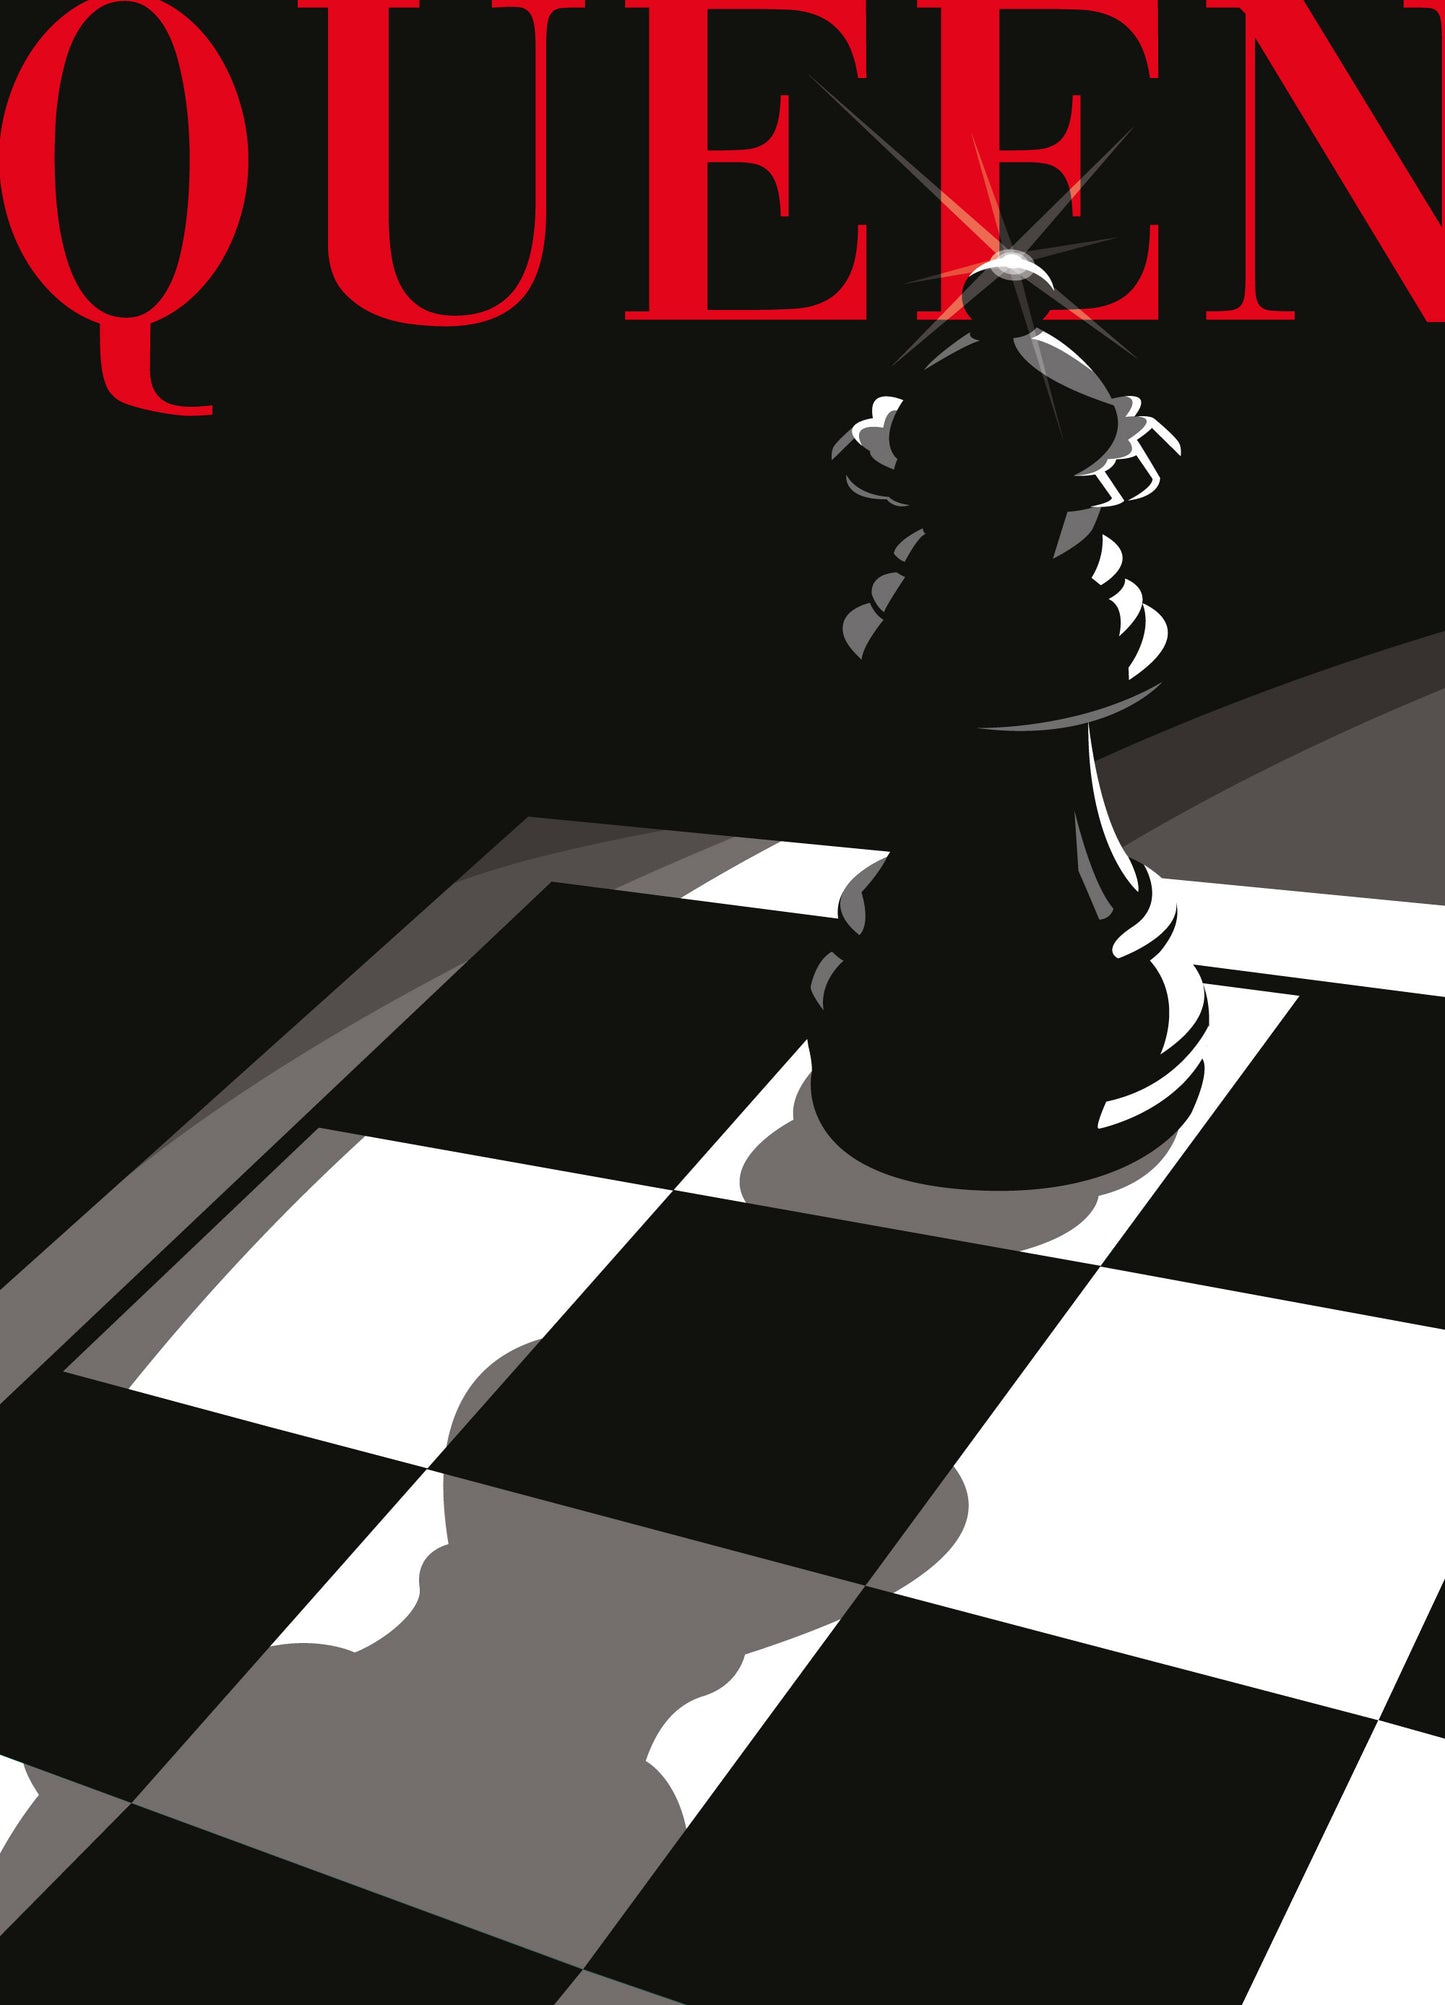 Queen Chess - Poster Print